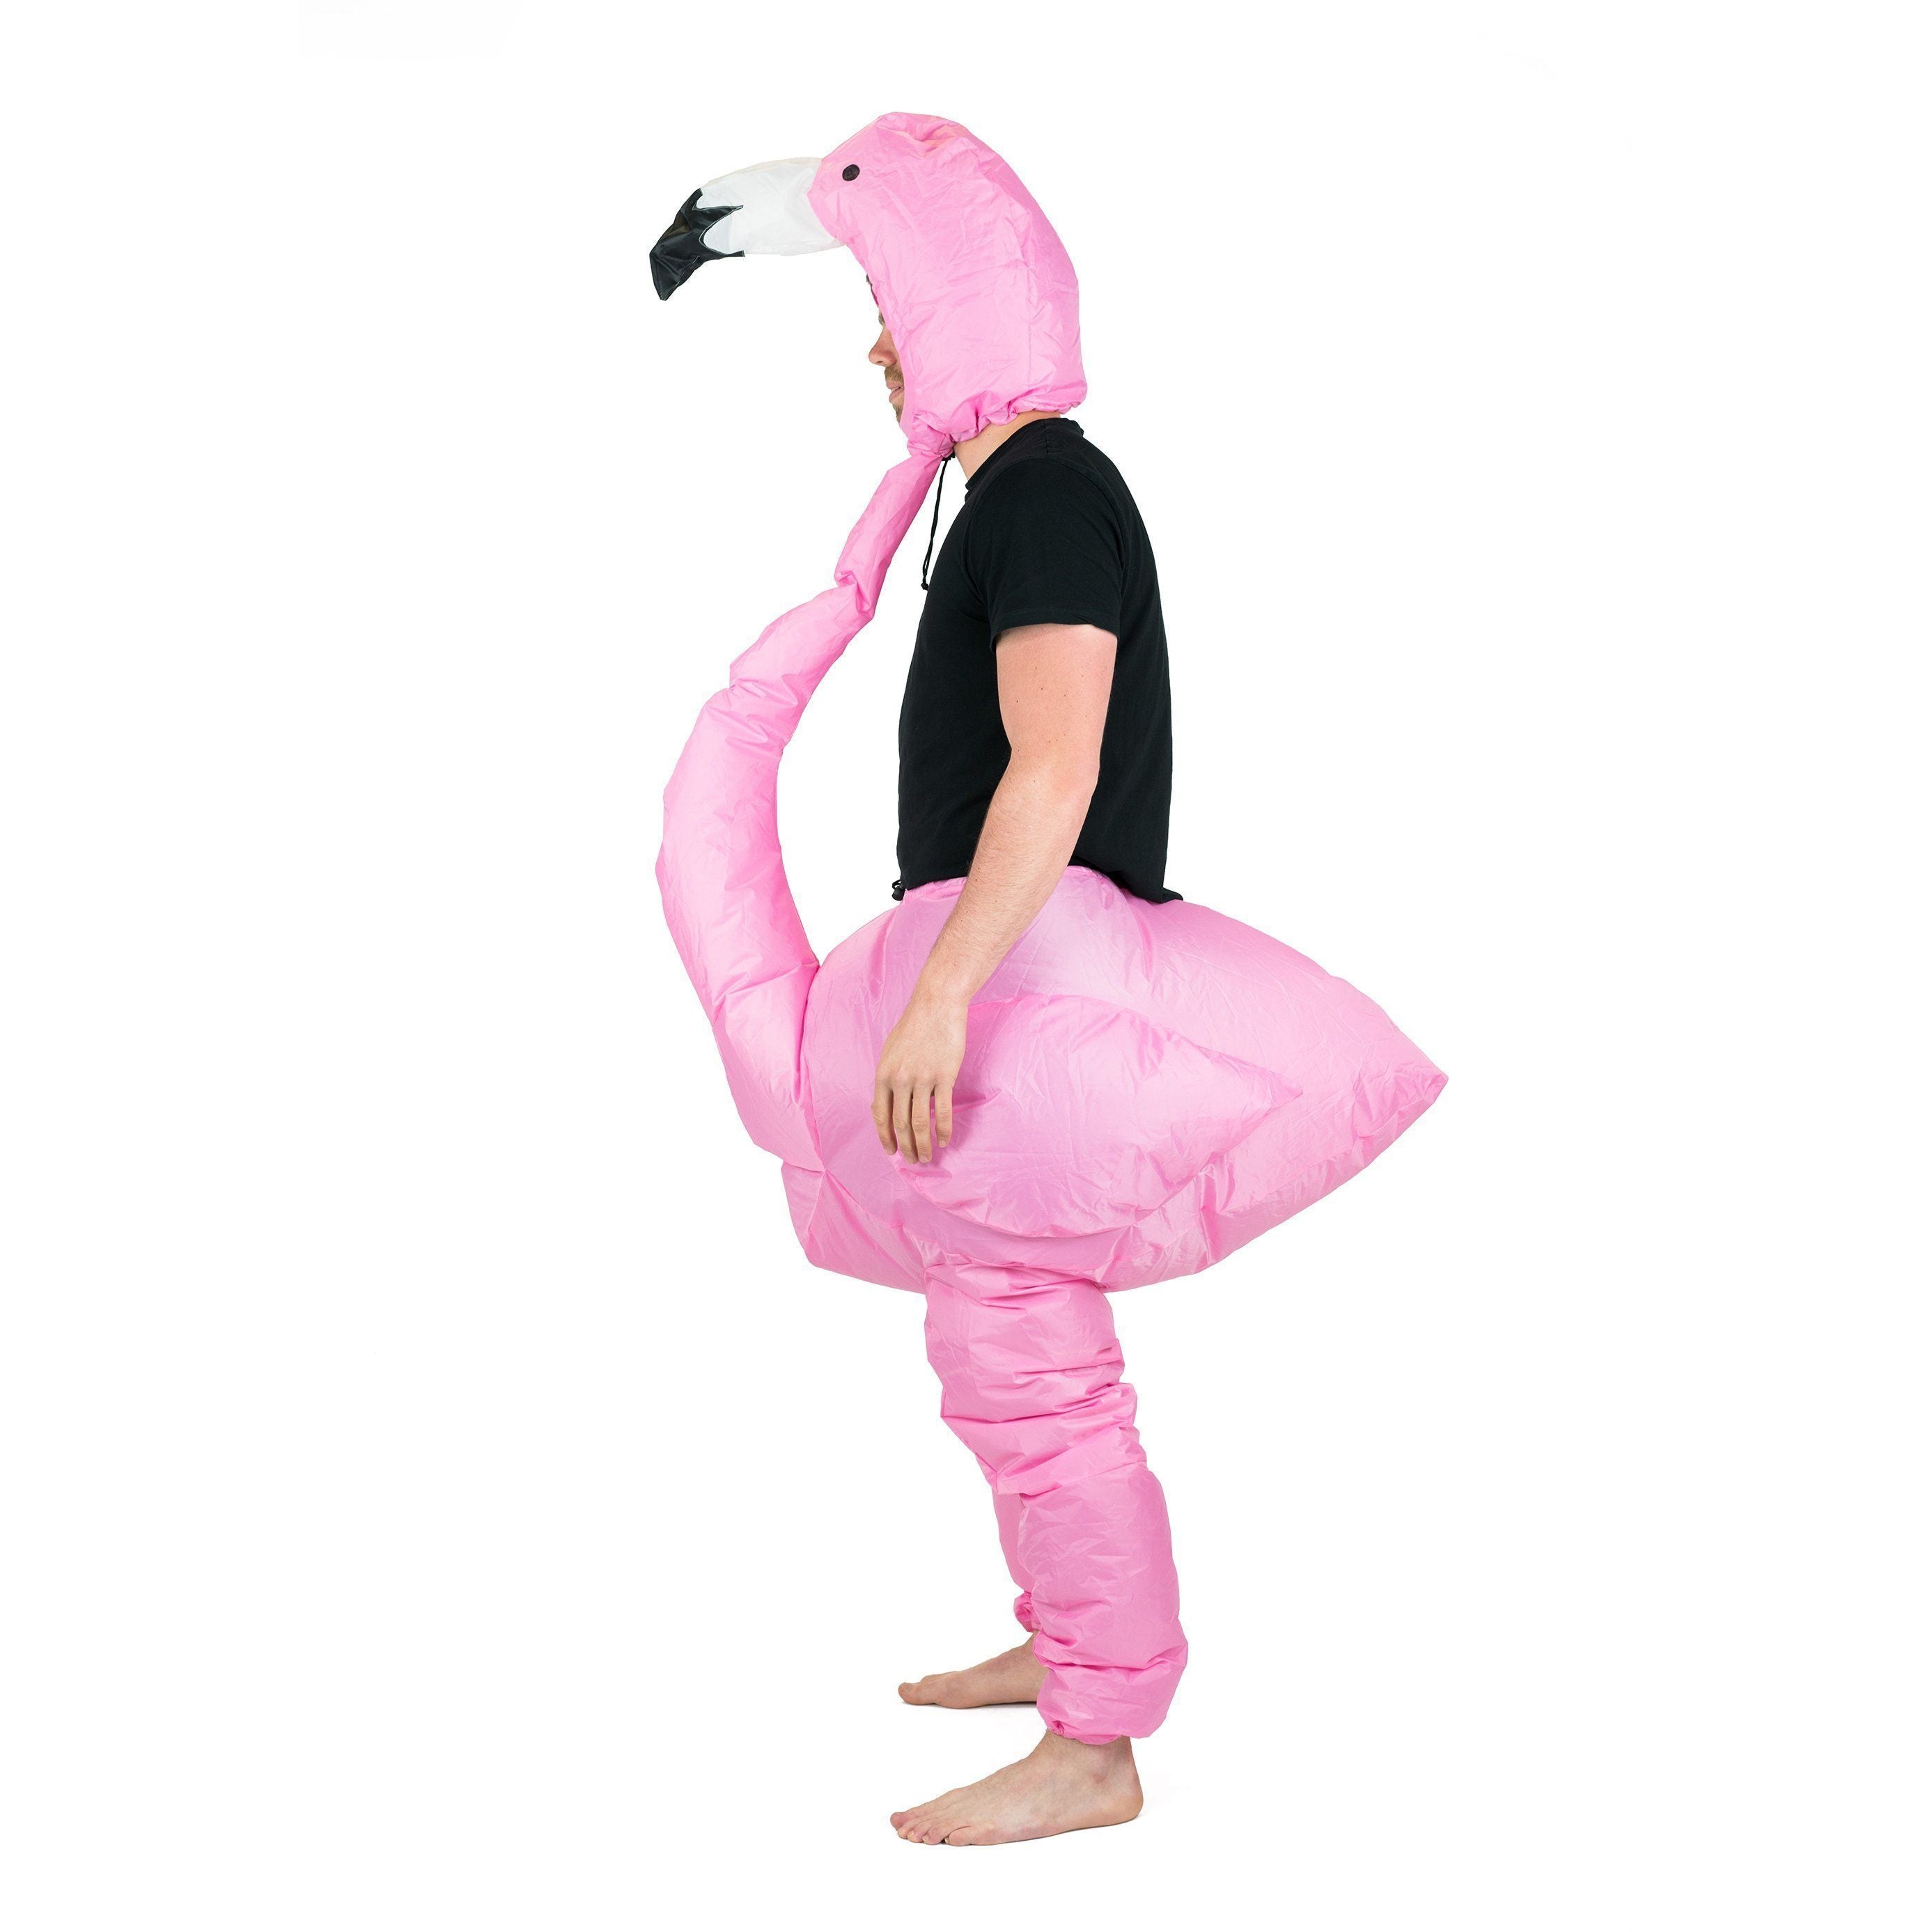 Fancy Dress - Inflatable Flamingo Costume